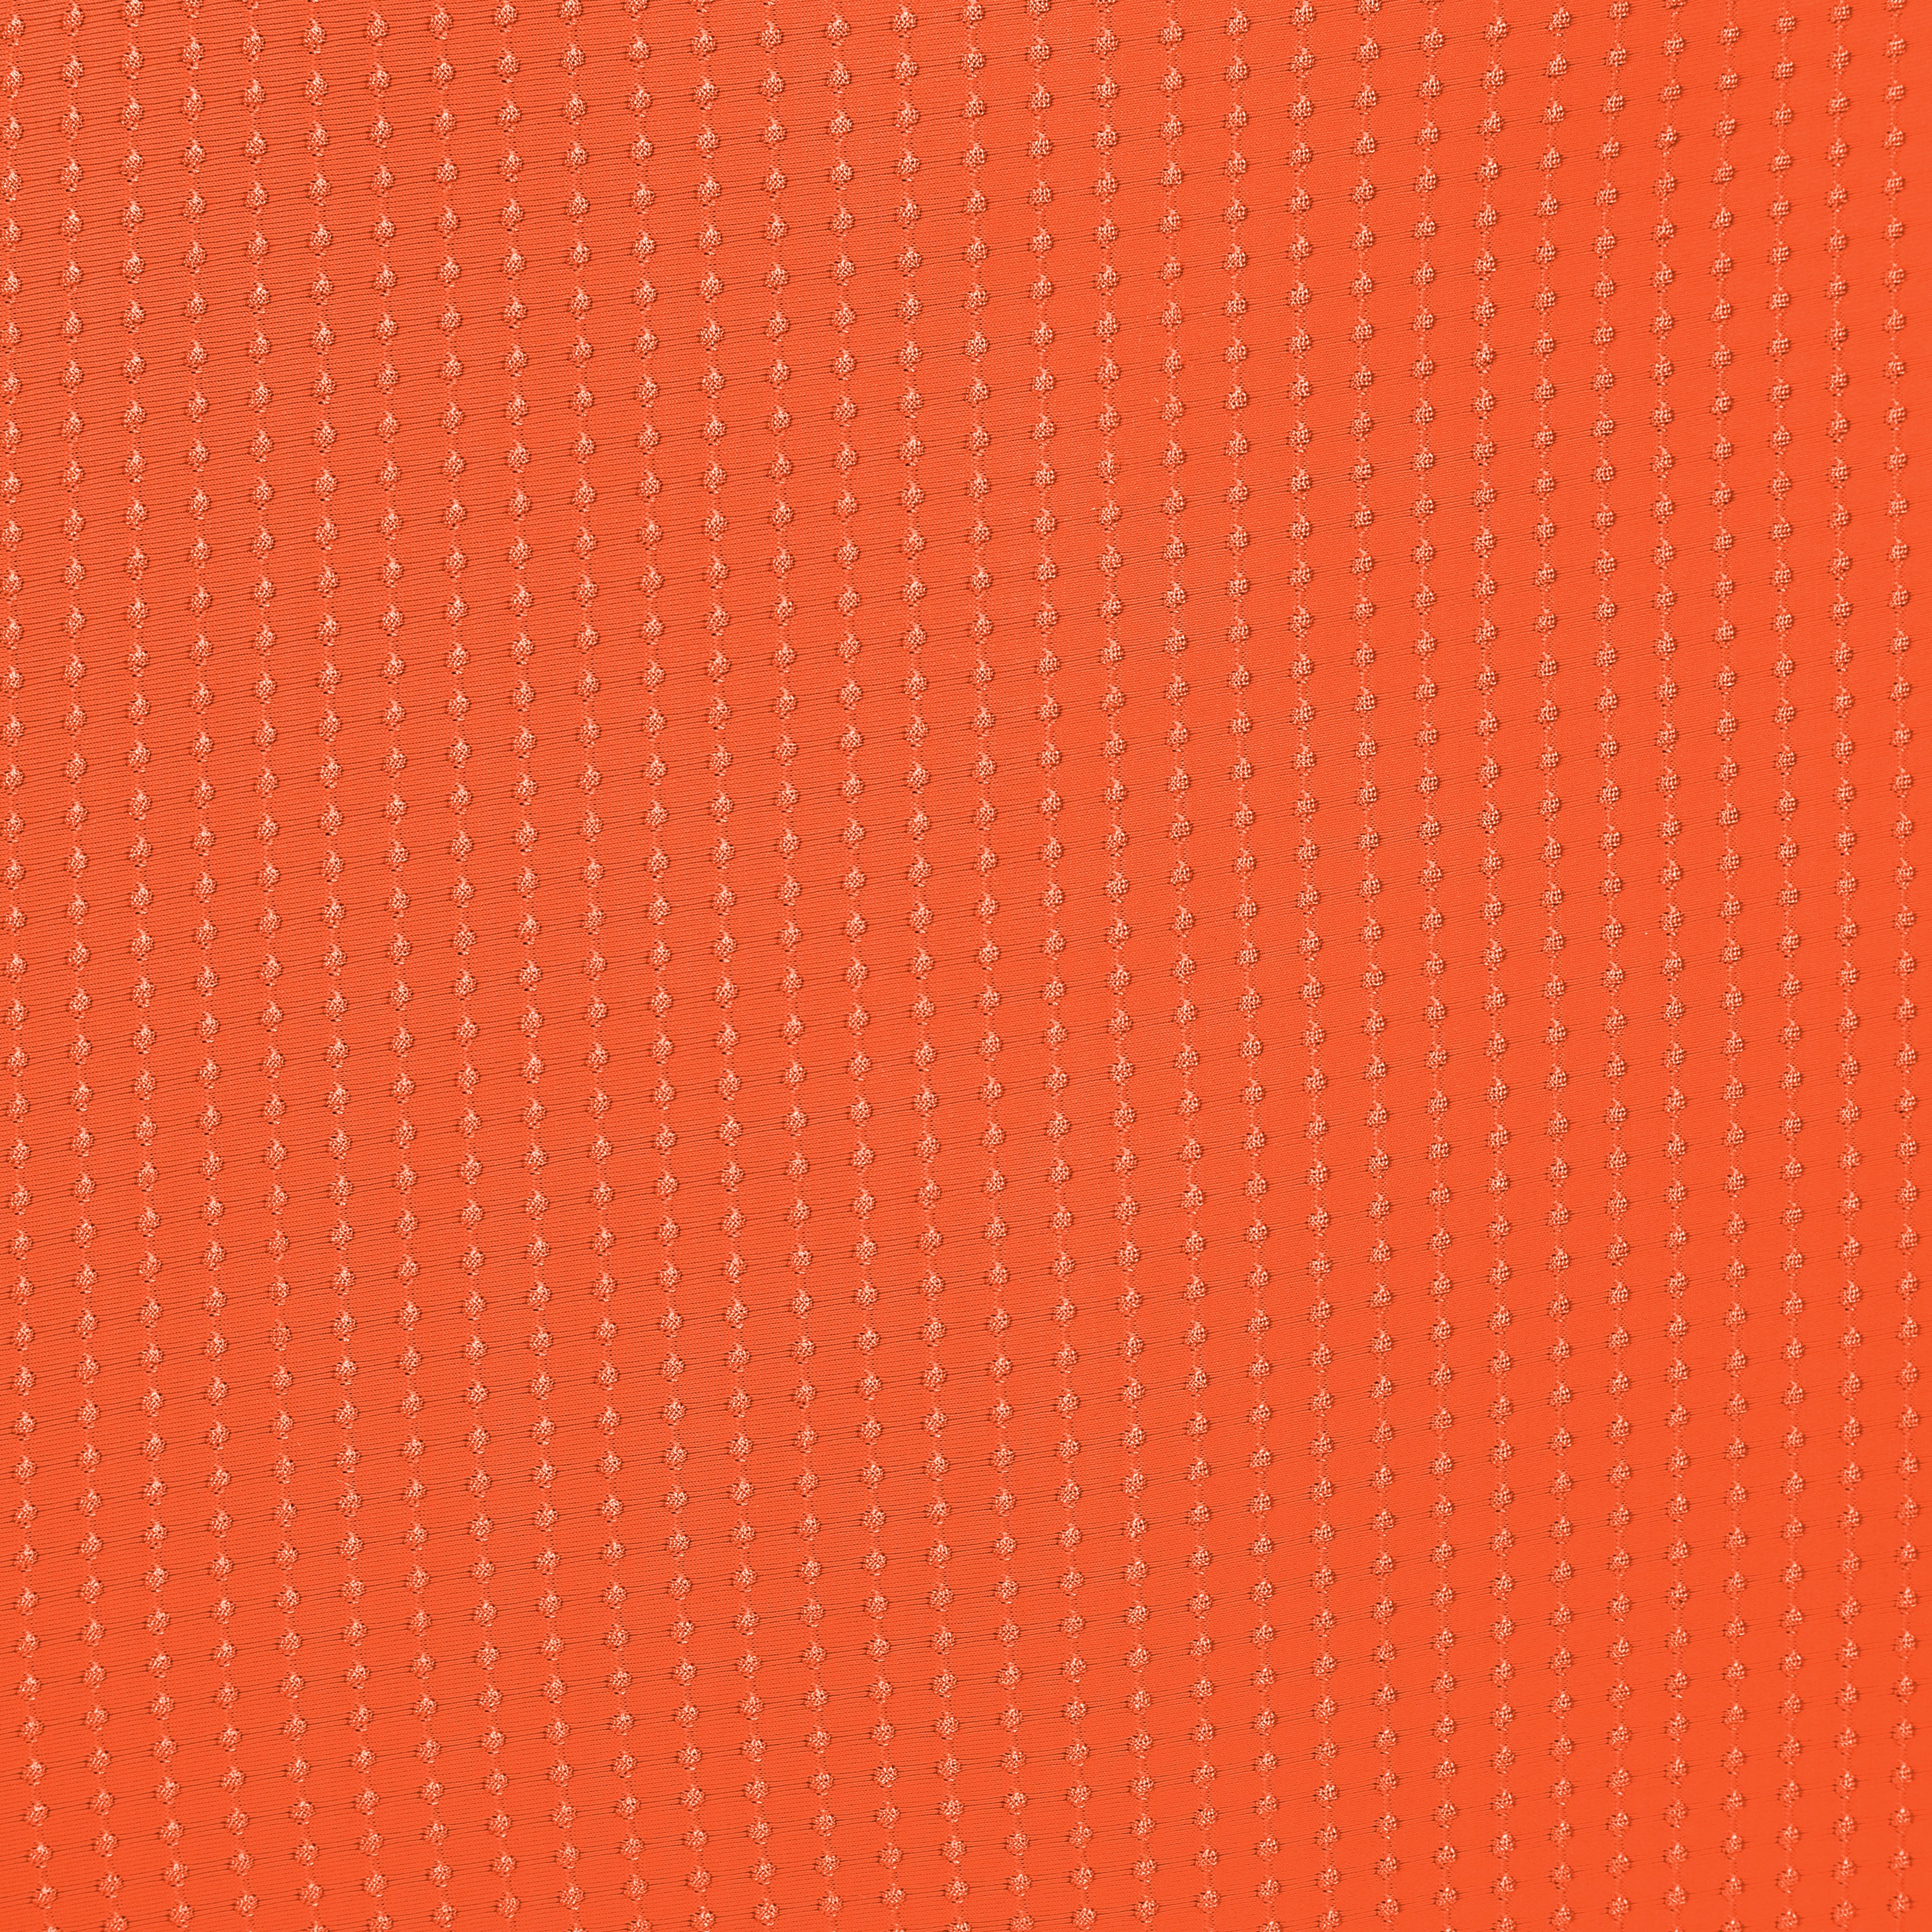 Bottom Dots-Orange Pipa